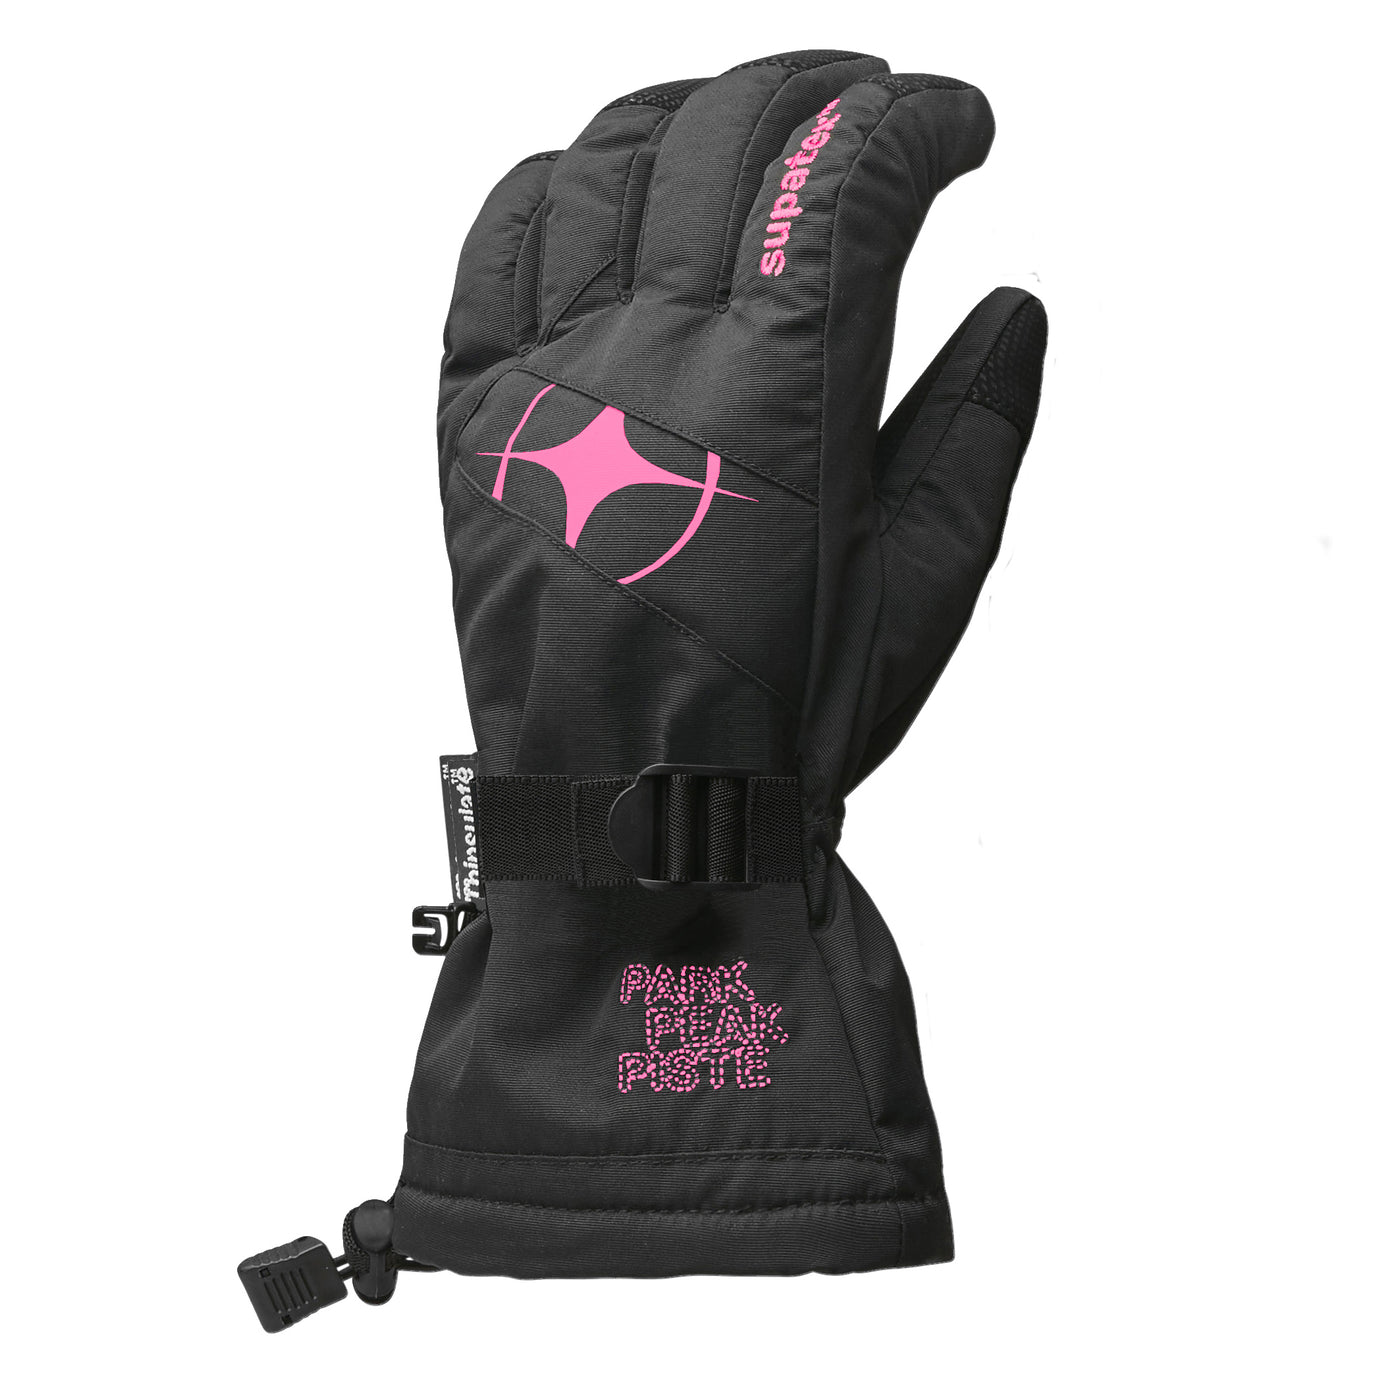 Manbi-PPP Womens Epic Glove Black/Fuchsia